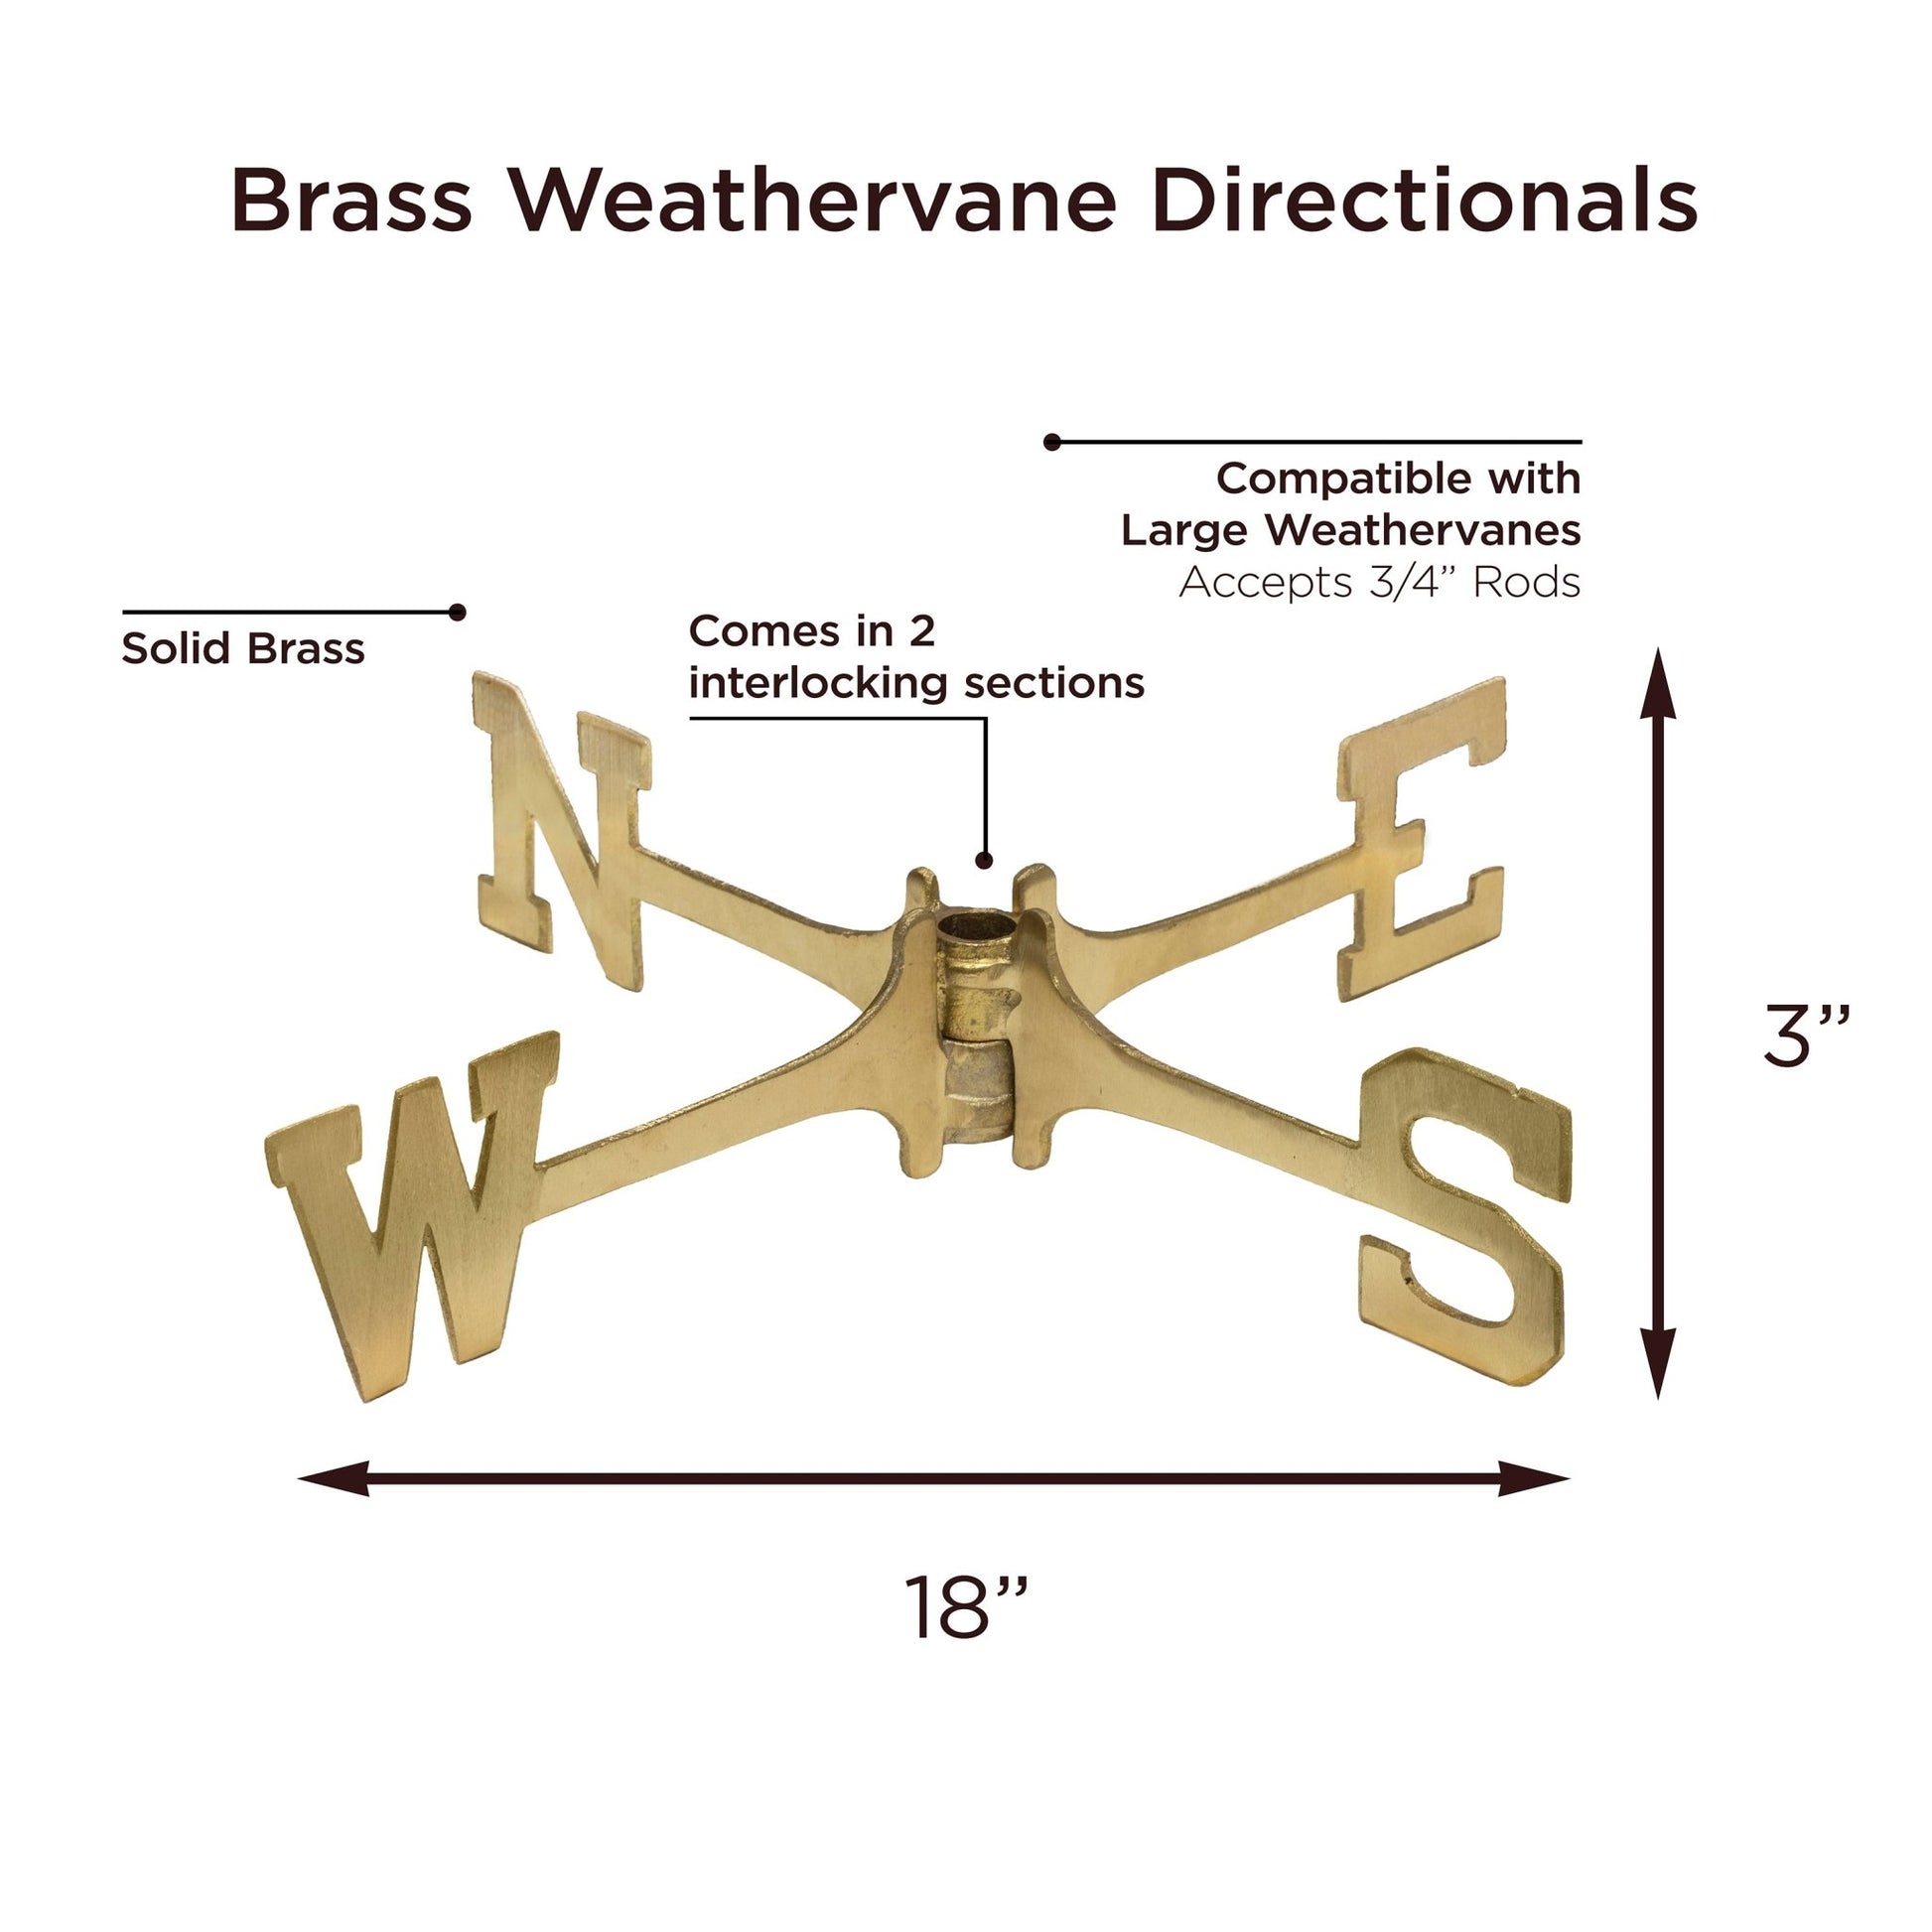 Brass 11" Weathervane Directionals - Good Directions